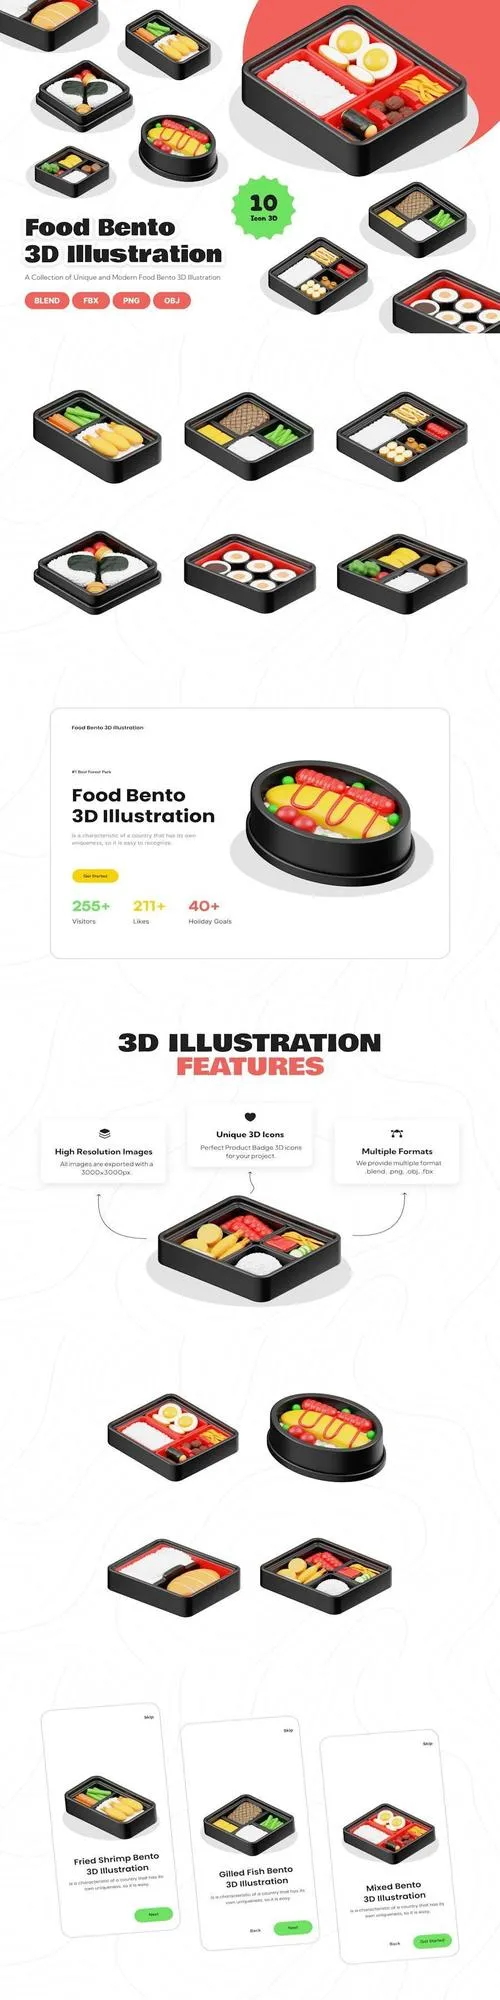 Food Bento 3D Illustration